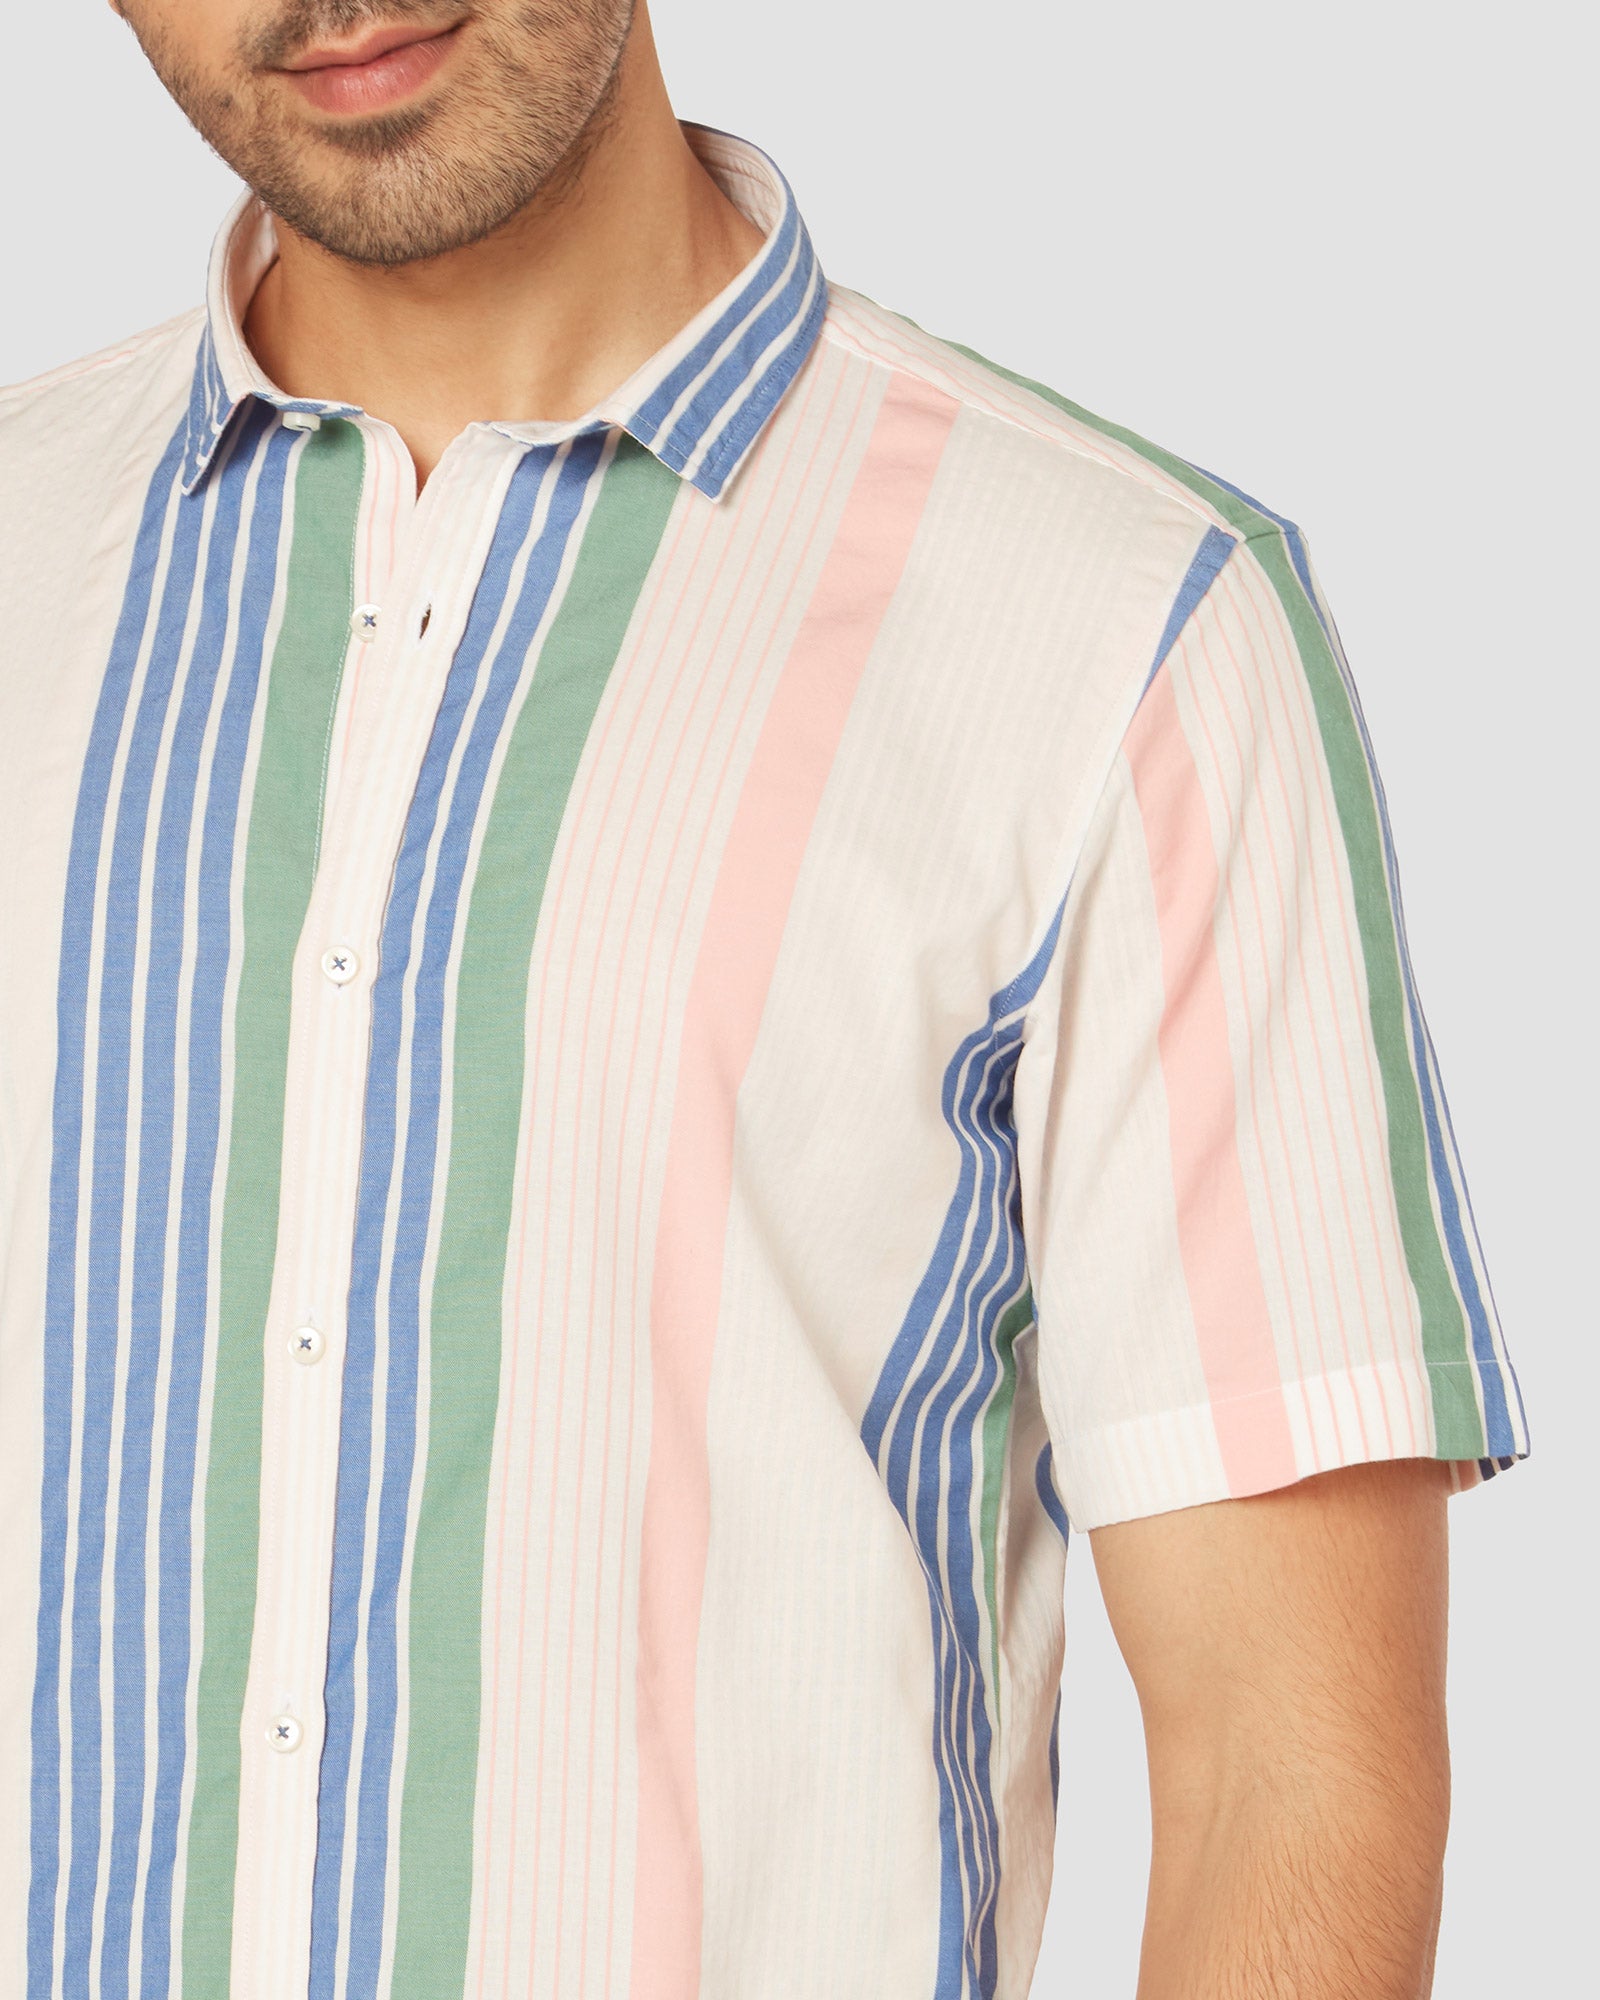 Bombay Shirt Company - Crest Striped Shirt